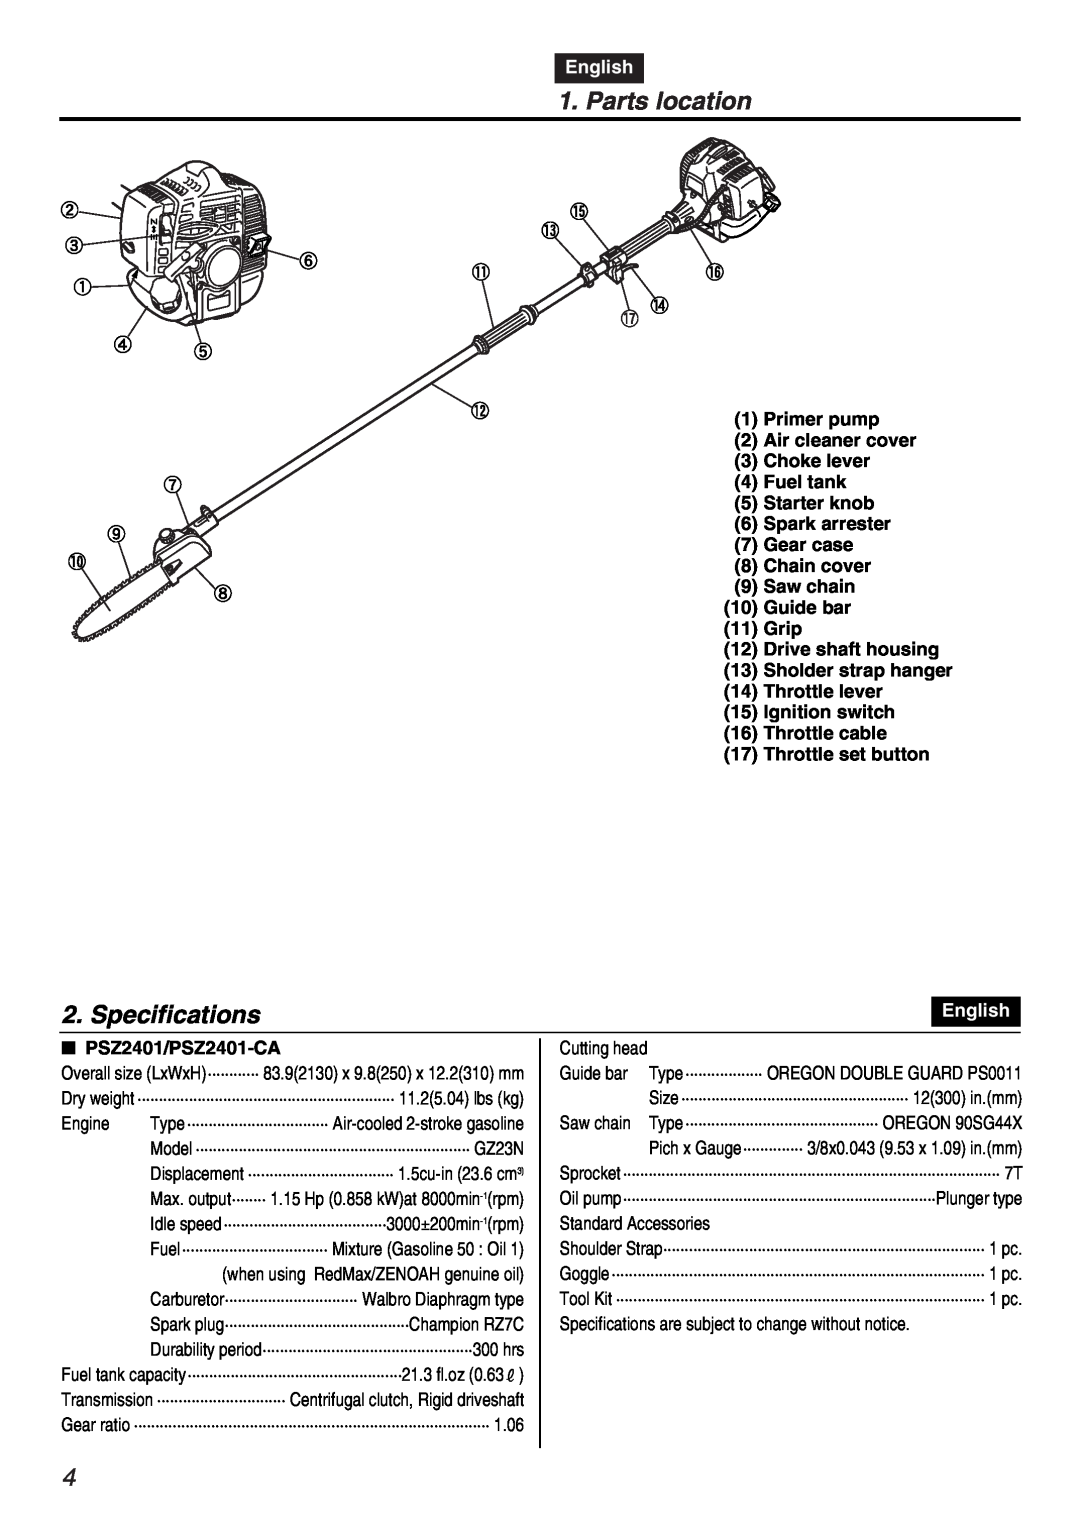 Zenoah PSZ2401 manual Parts location, Specifications, English, Saw chain 